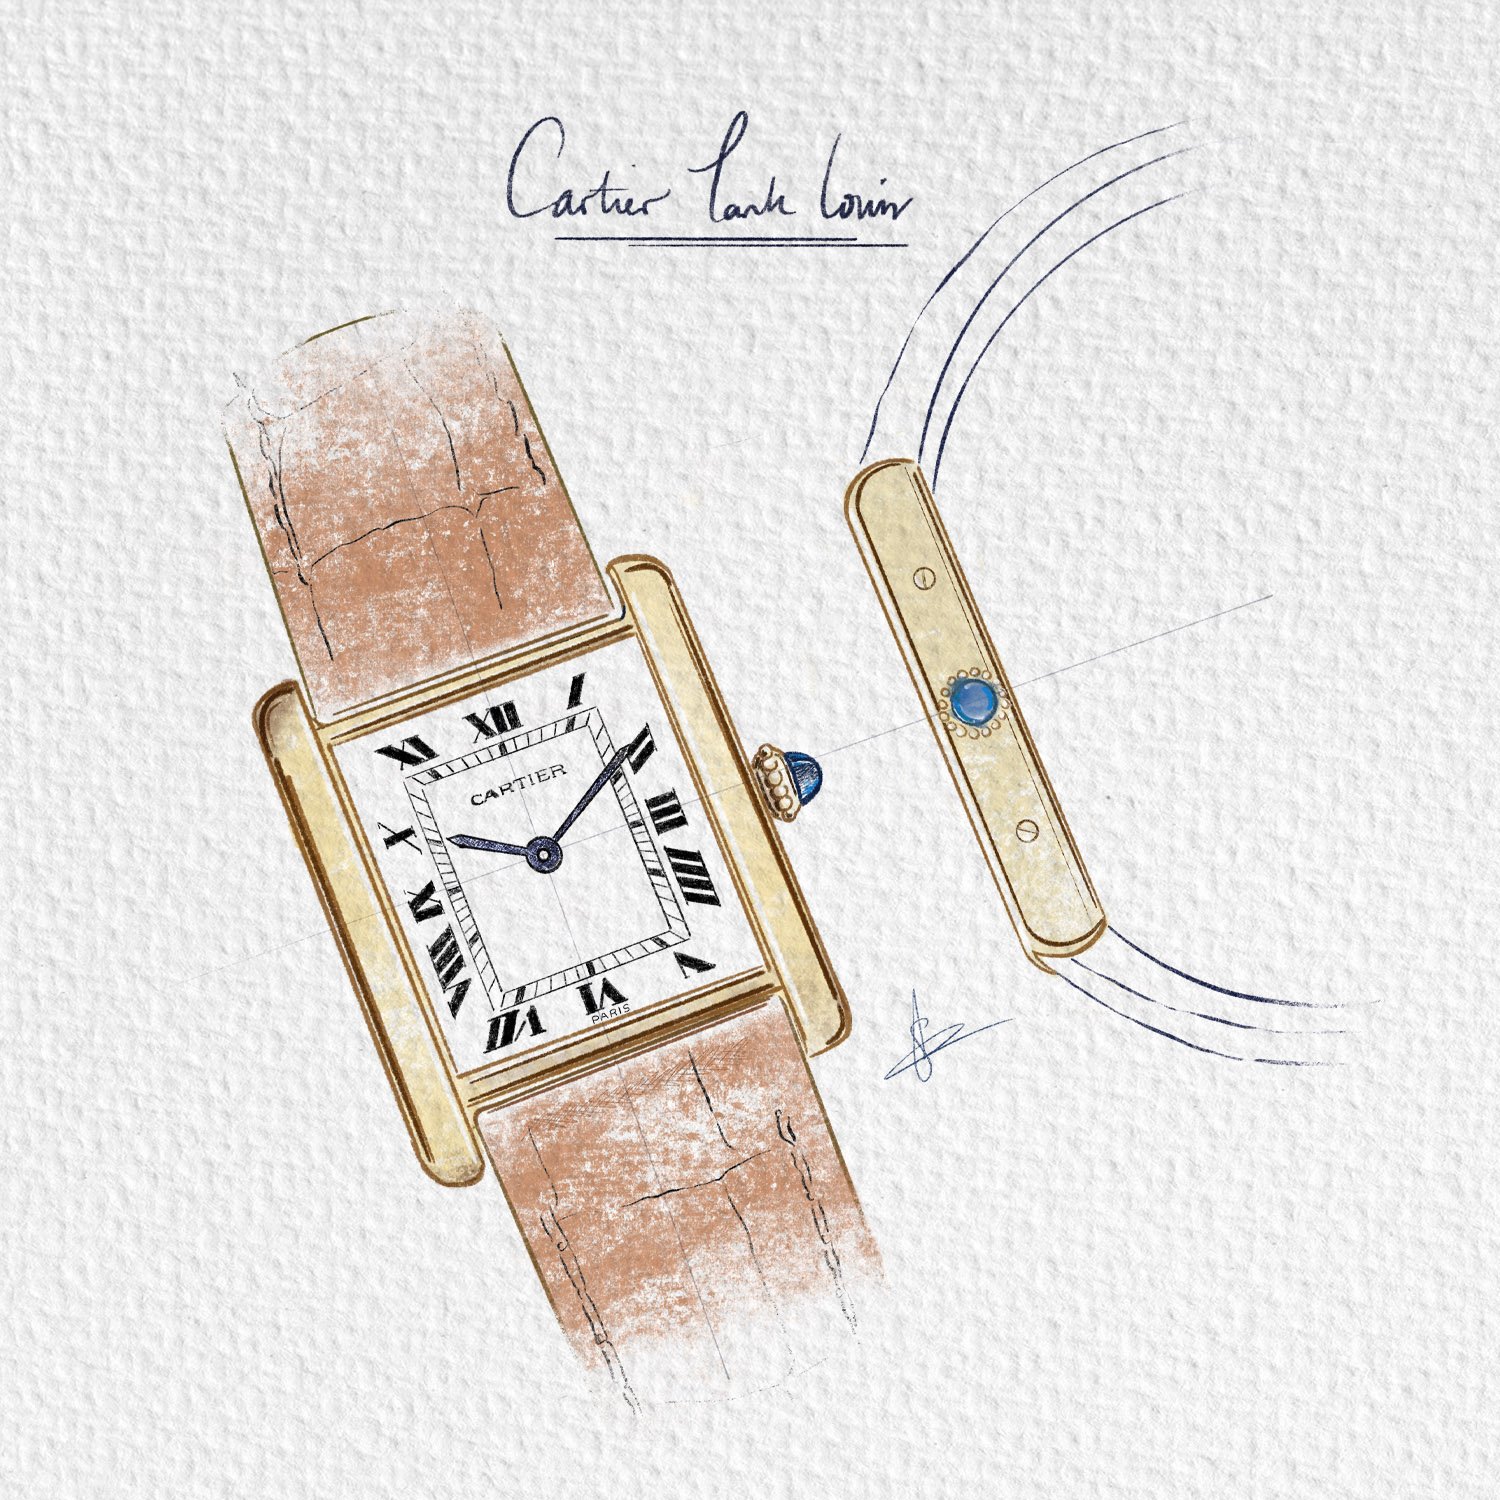 Cartier Tank Louis Watch Sketch 